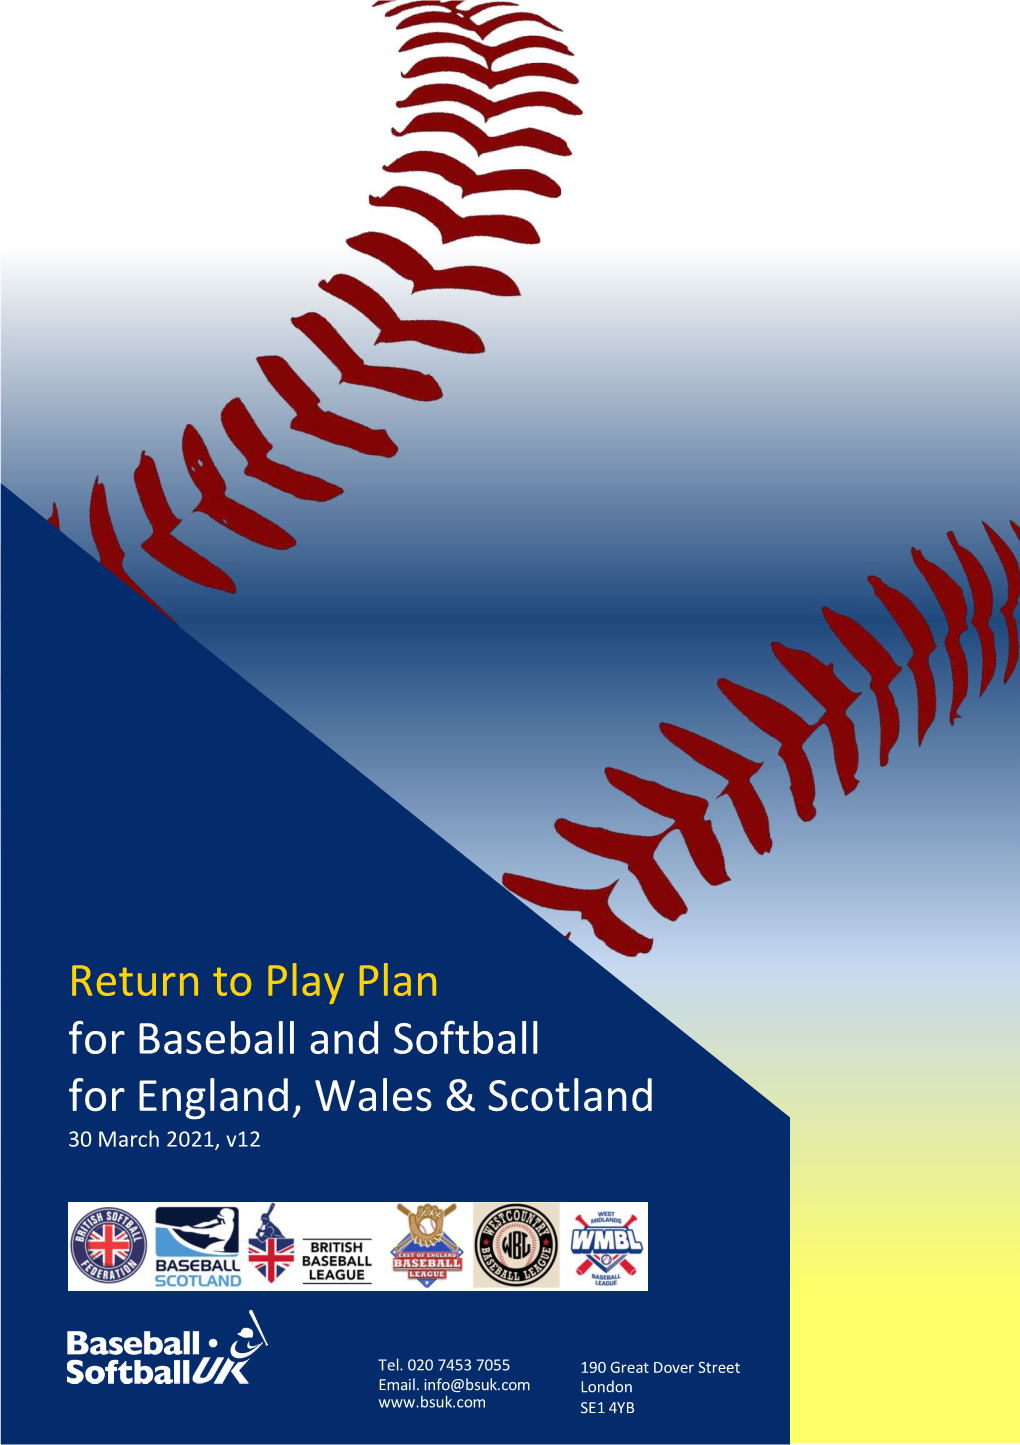 Baseball Softball UK's Return to Play Plan